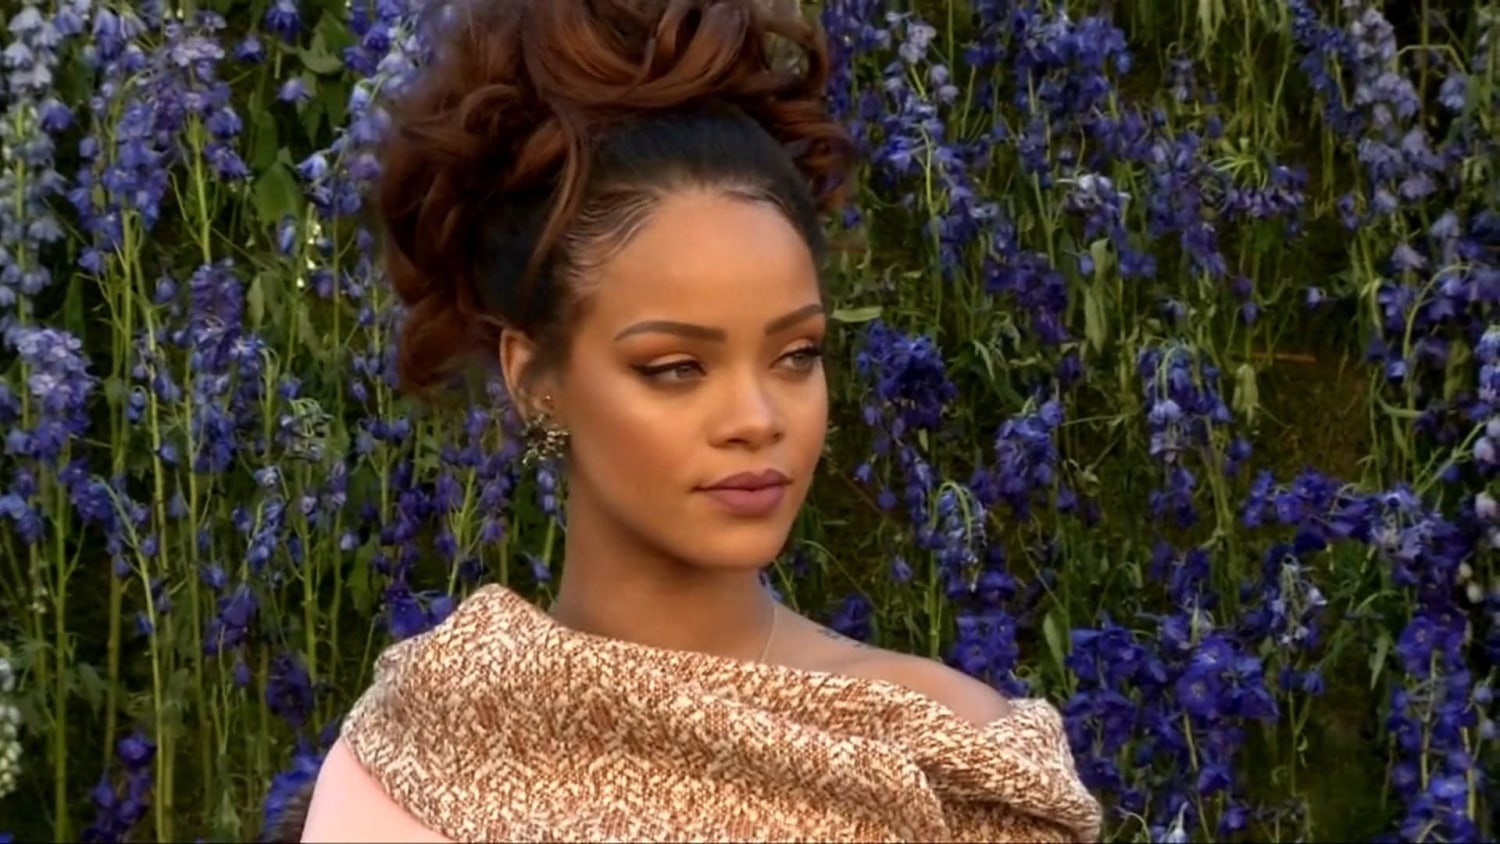 BEST Price Guaranteed FENTY Rising: Rihanna's Luxury Line With